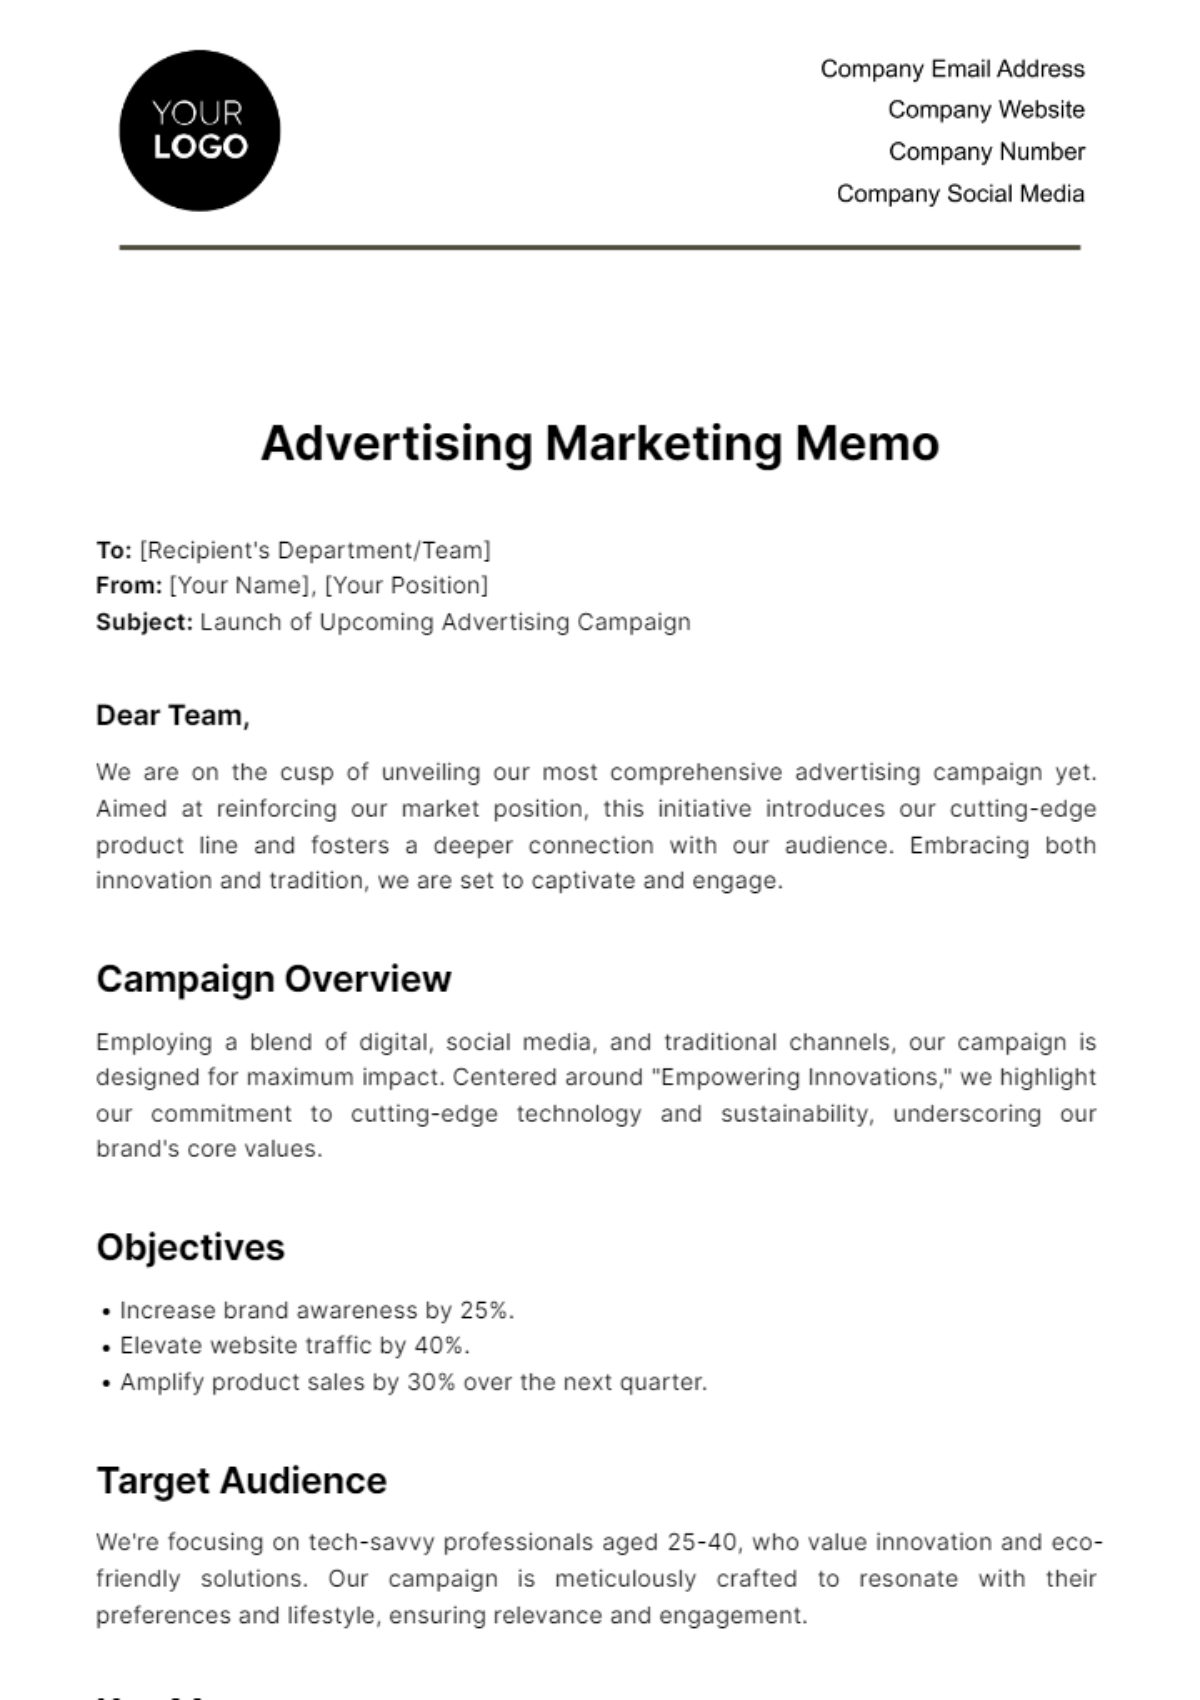 Free Advertising Marketing Memo Template